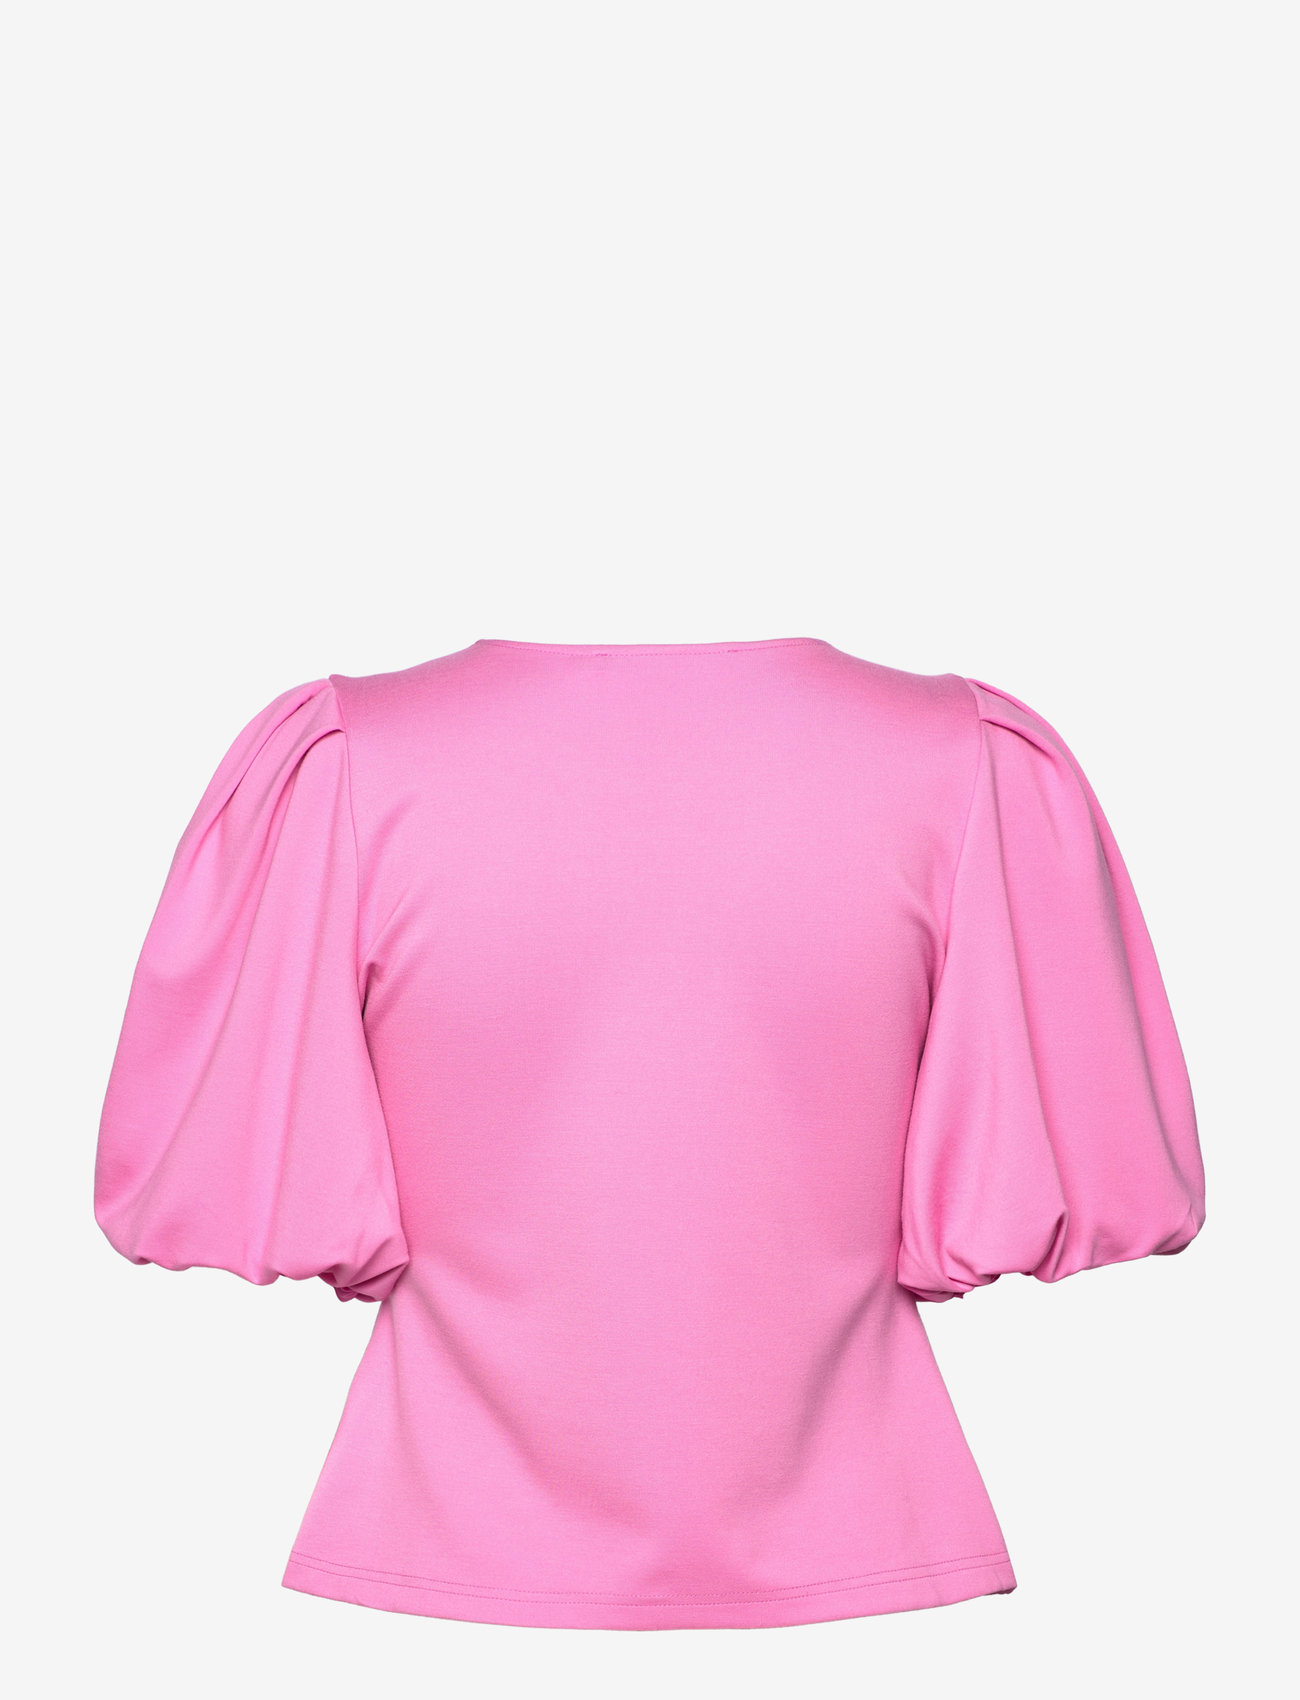 Gestuz - BlancaGZ blouse - short-sleeved blouses - super pink - 1